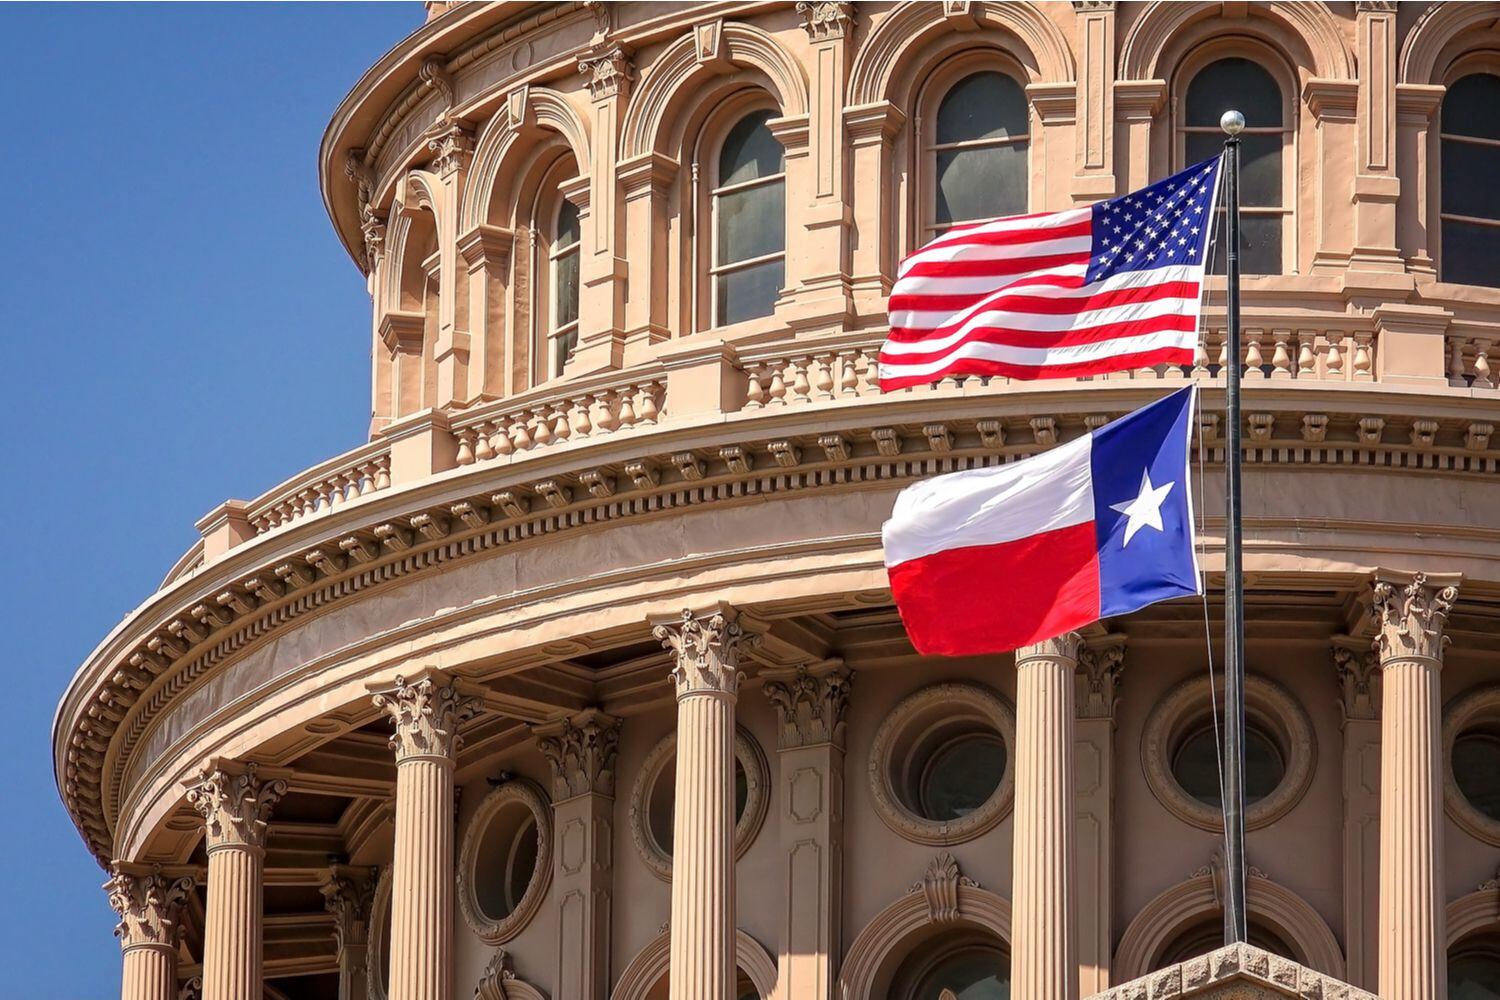 Texas flag. (Shutterstock)